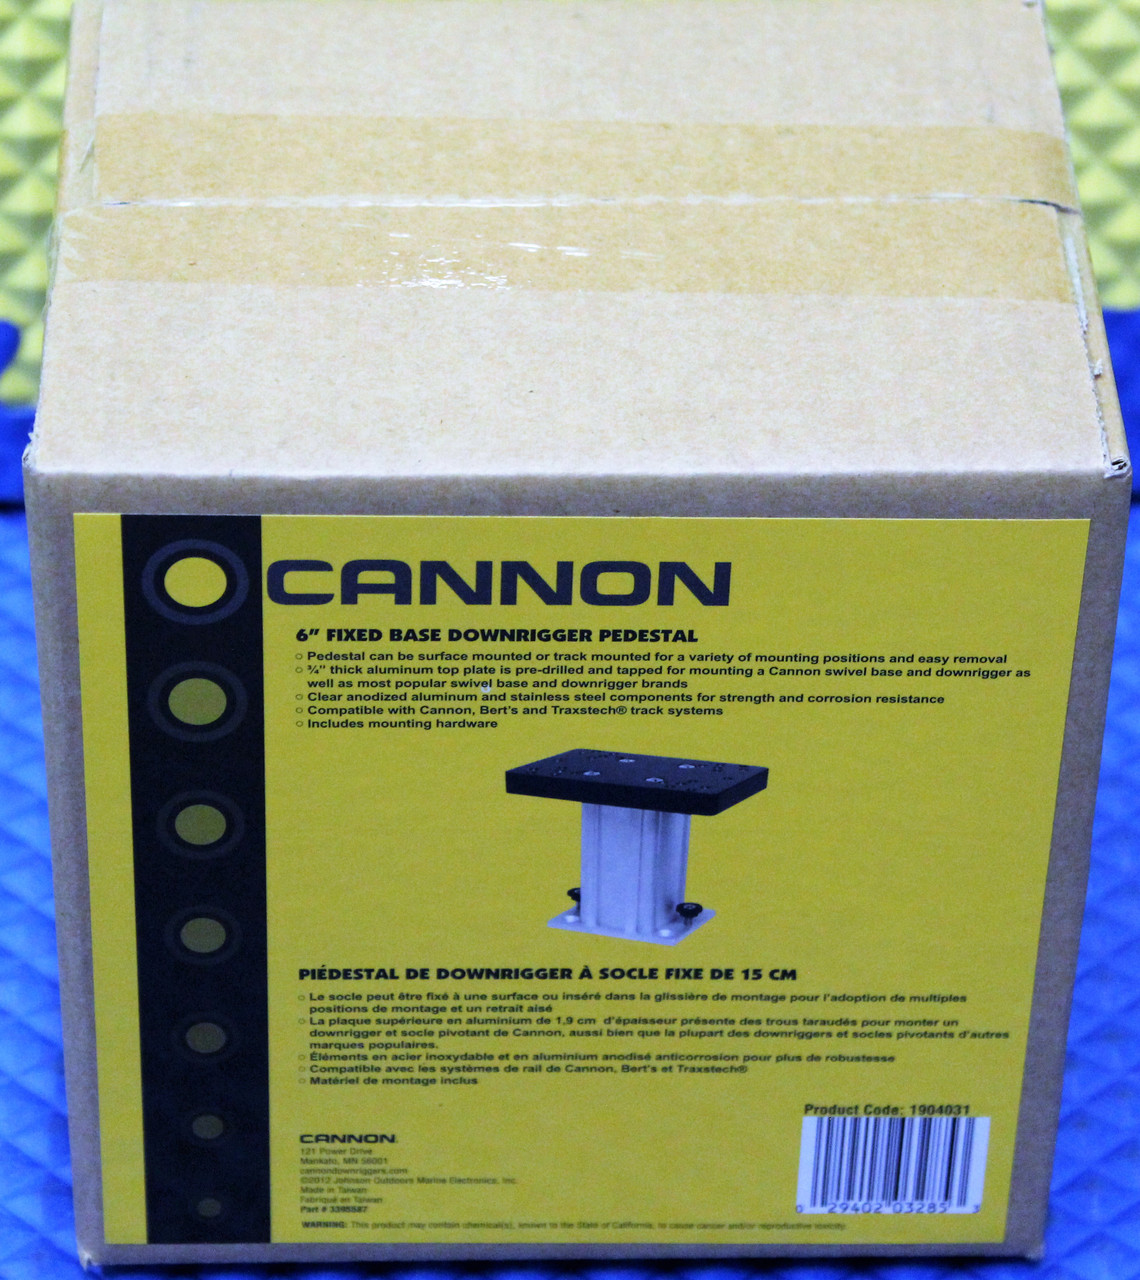 Cannon Downrigger Accessories 6" Aluminum Fixed Base Downrigger Pedestal 1904031